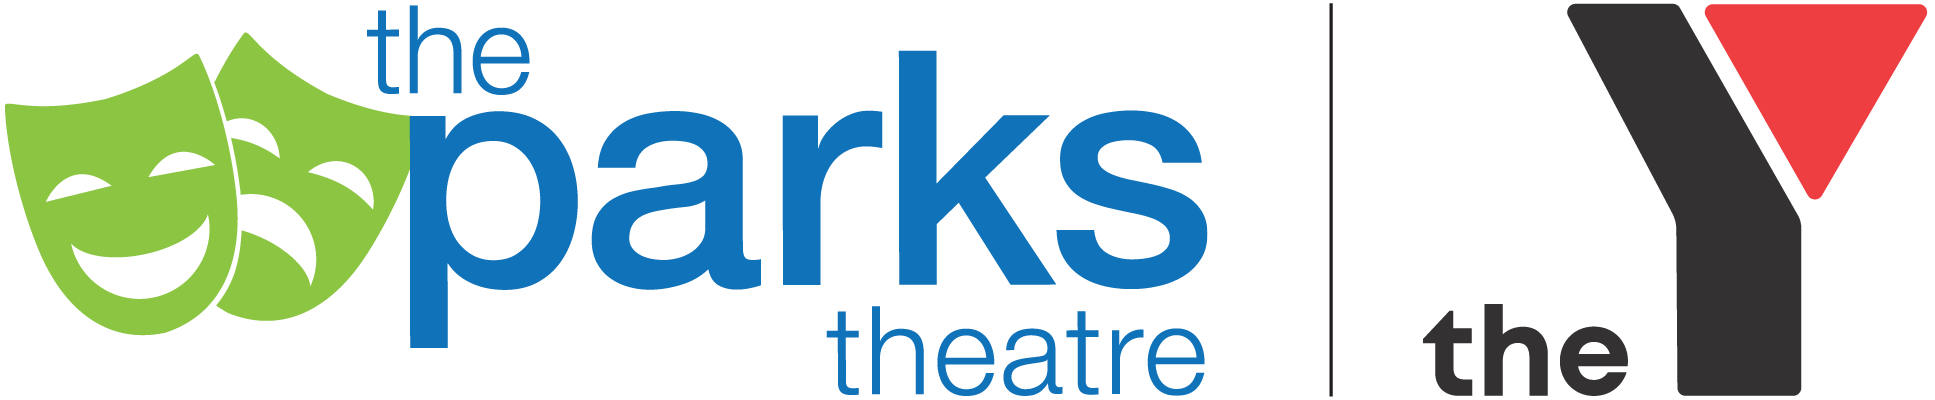 The Parks Theatre